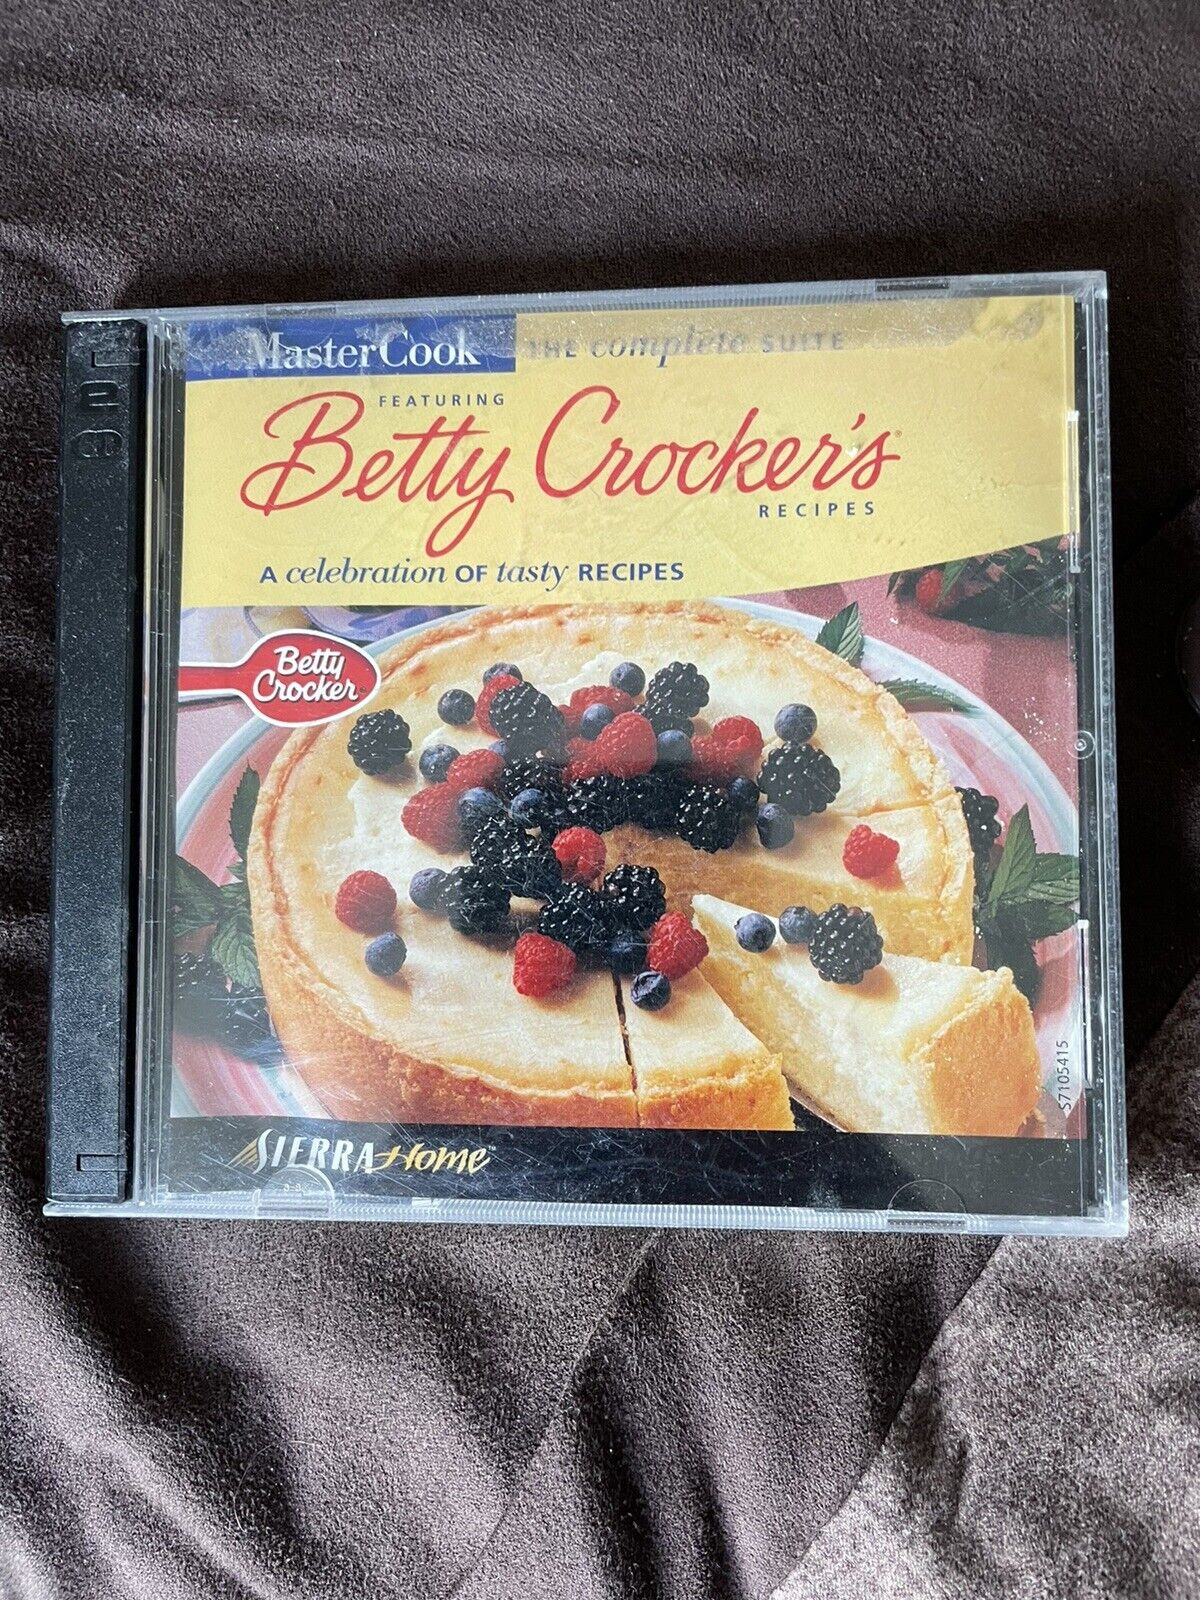 Mastercook Featuring Betty Crocker\'s Recipes 2 CD Set